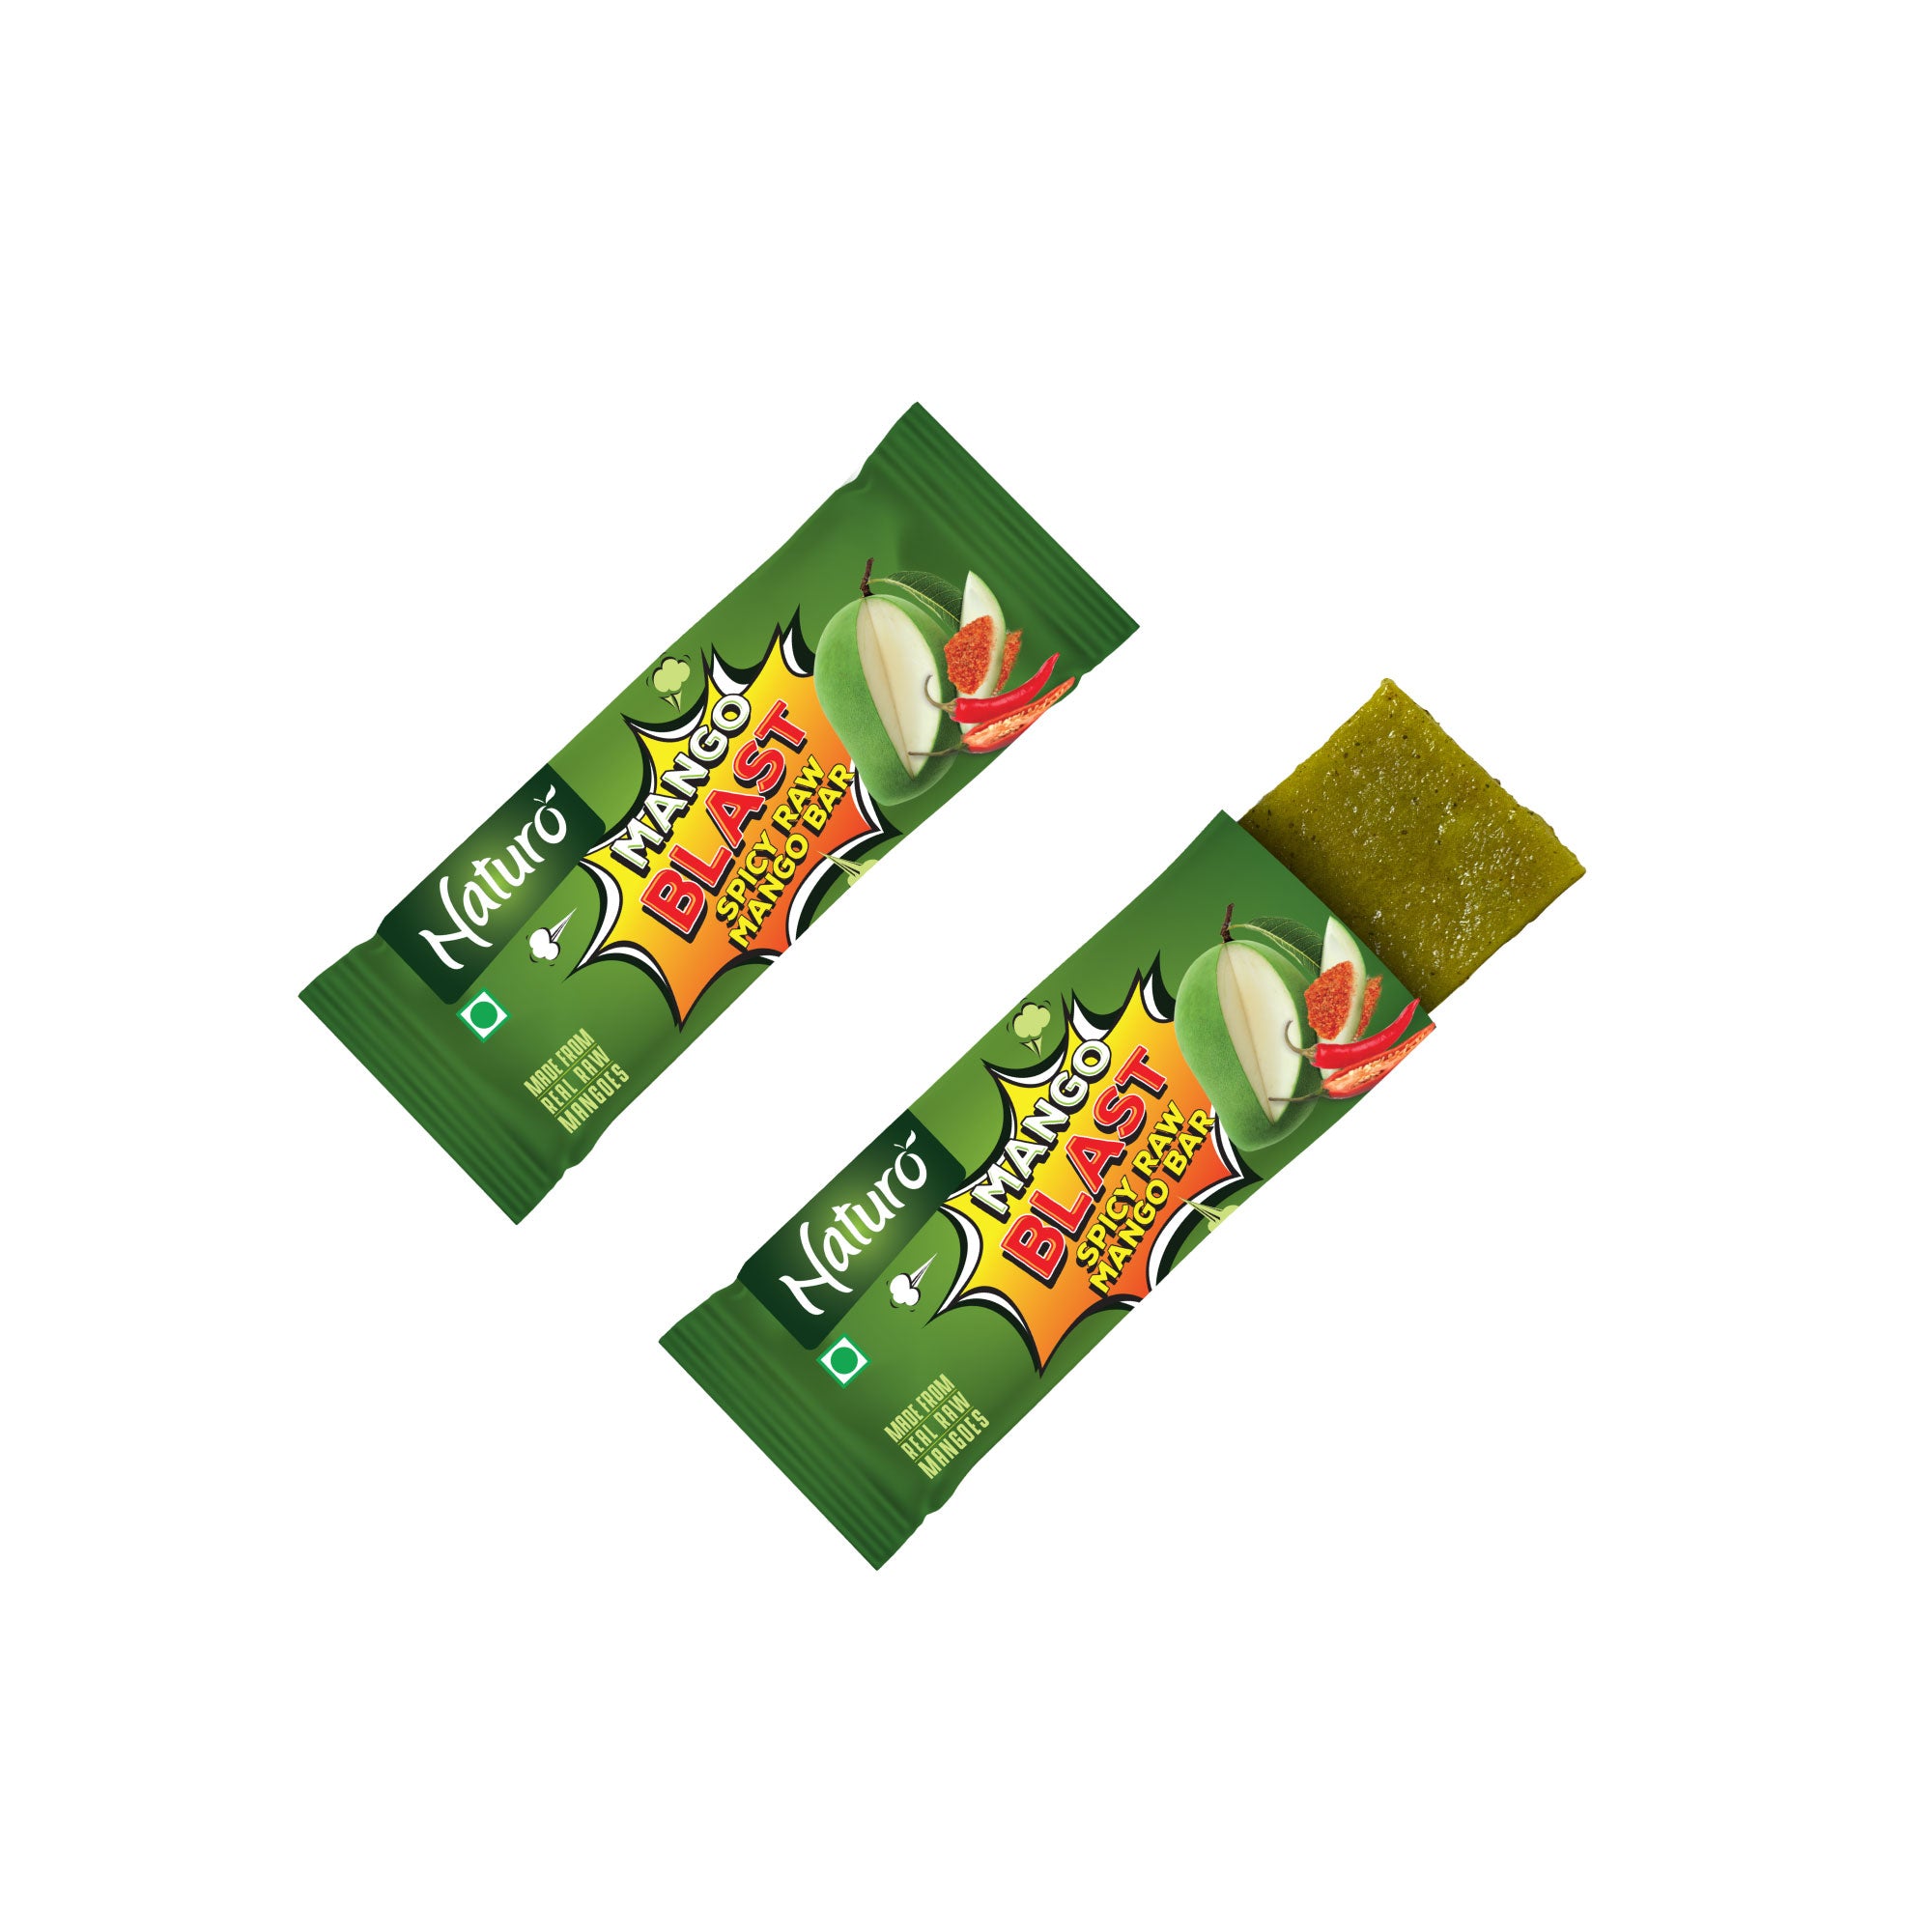 Naturo Fruit Bars - Spicy Raw Mango Bar - 7g x 6 nos - Pack of 12